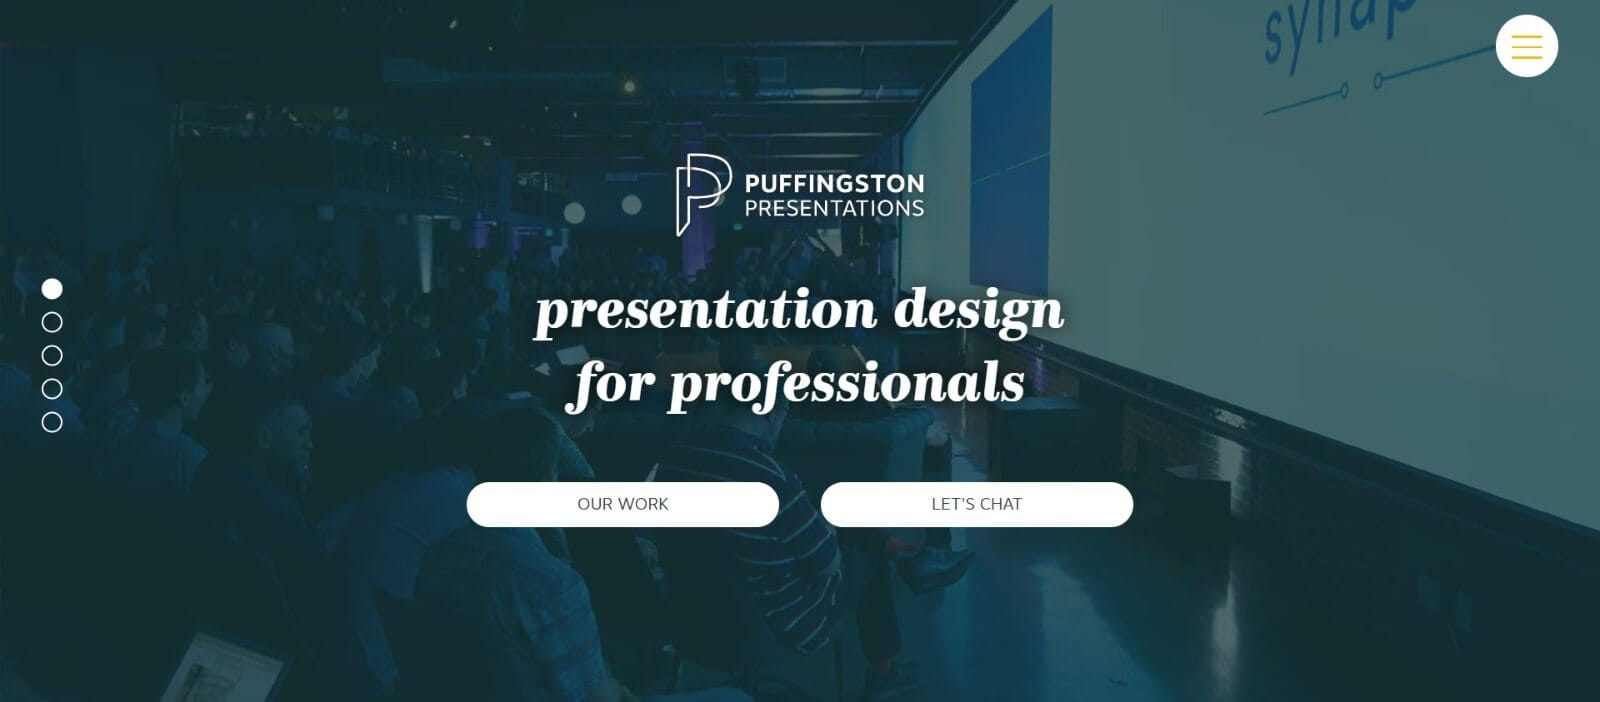 Puffingston presentation design service